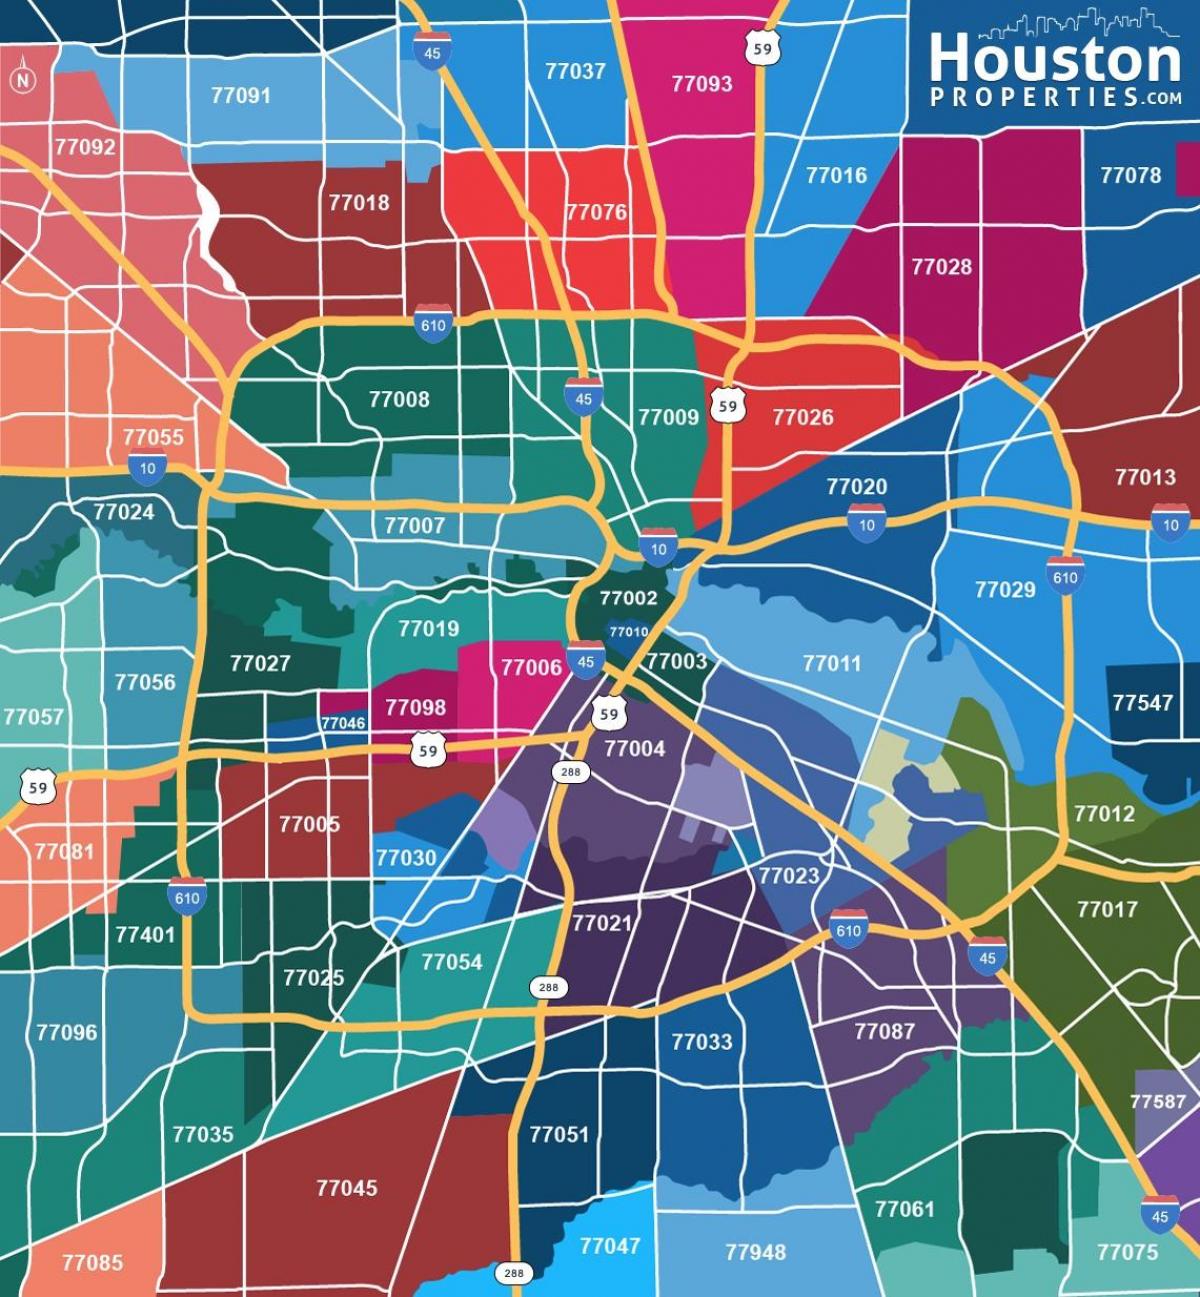 zemljevid Houston zip kode